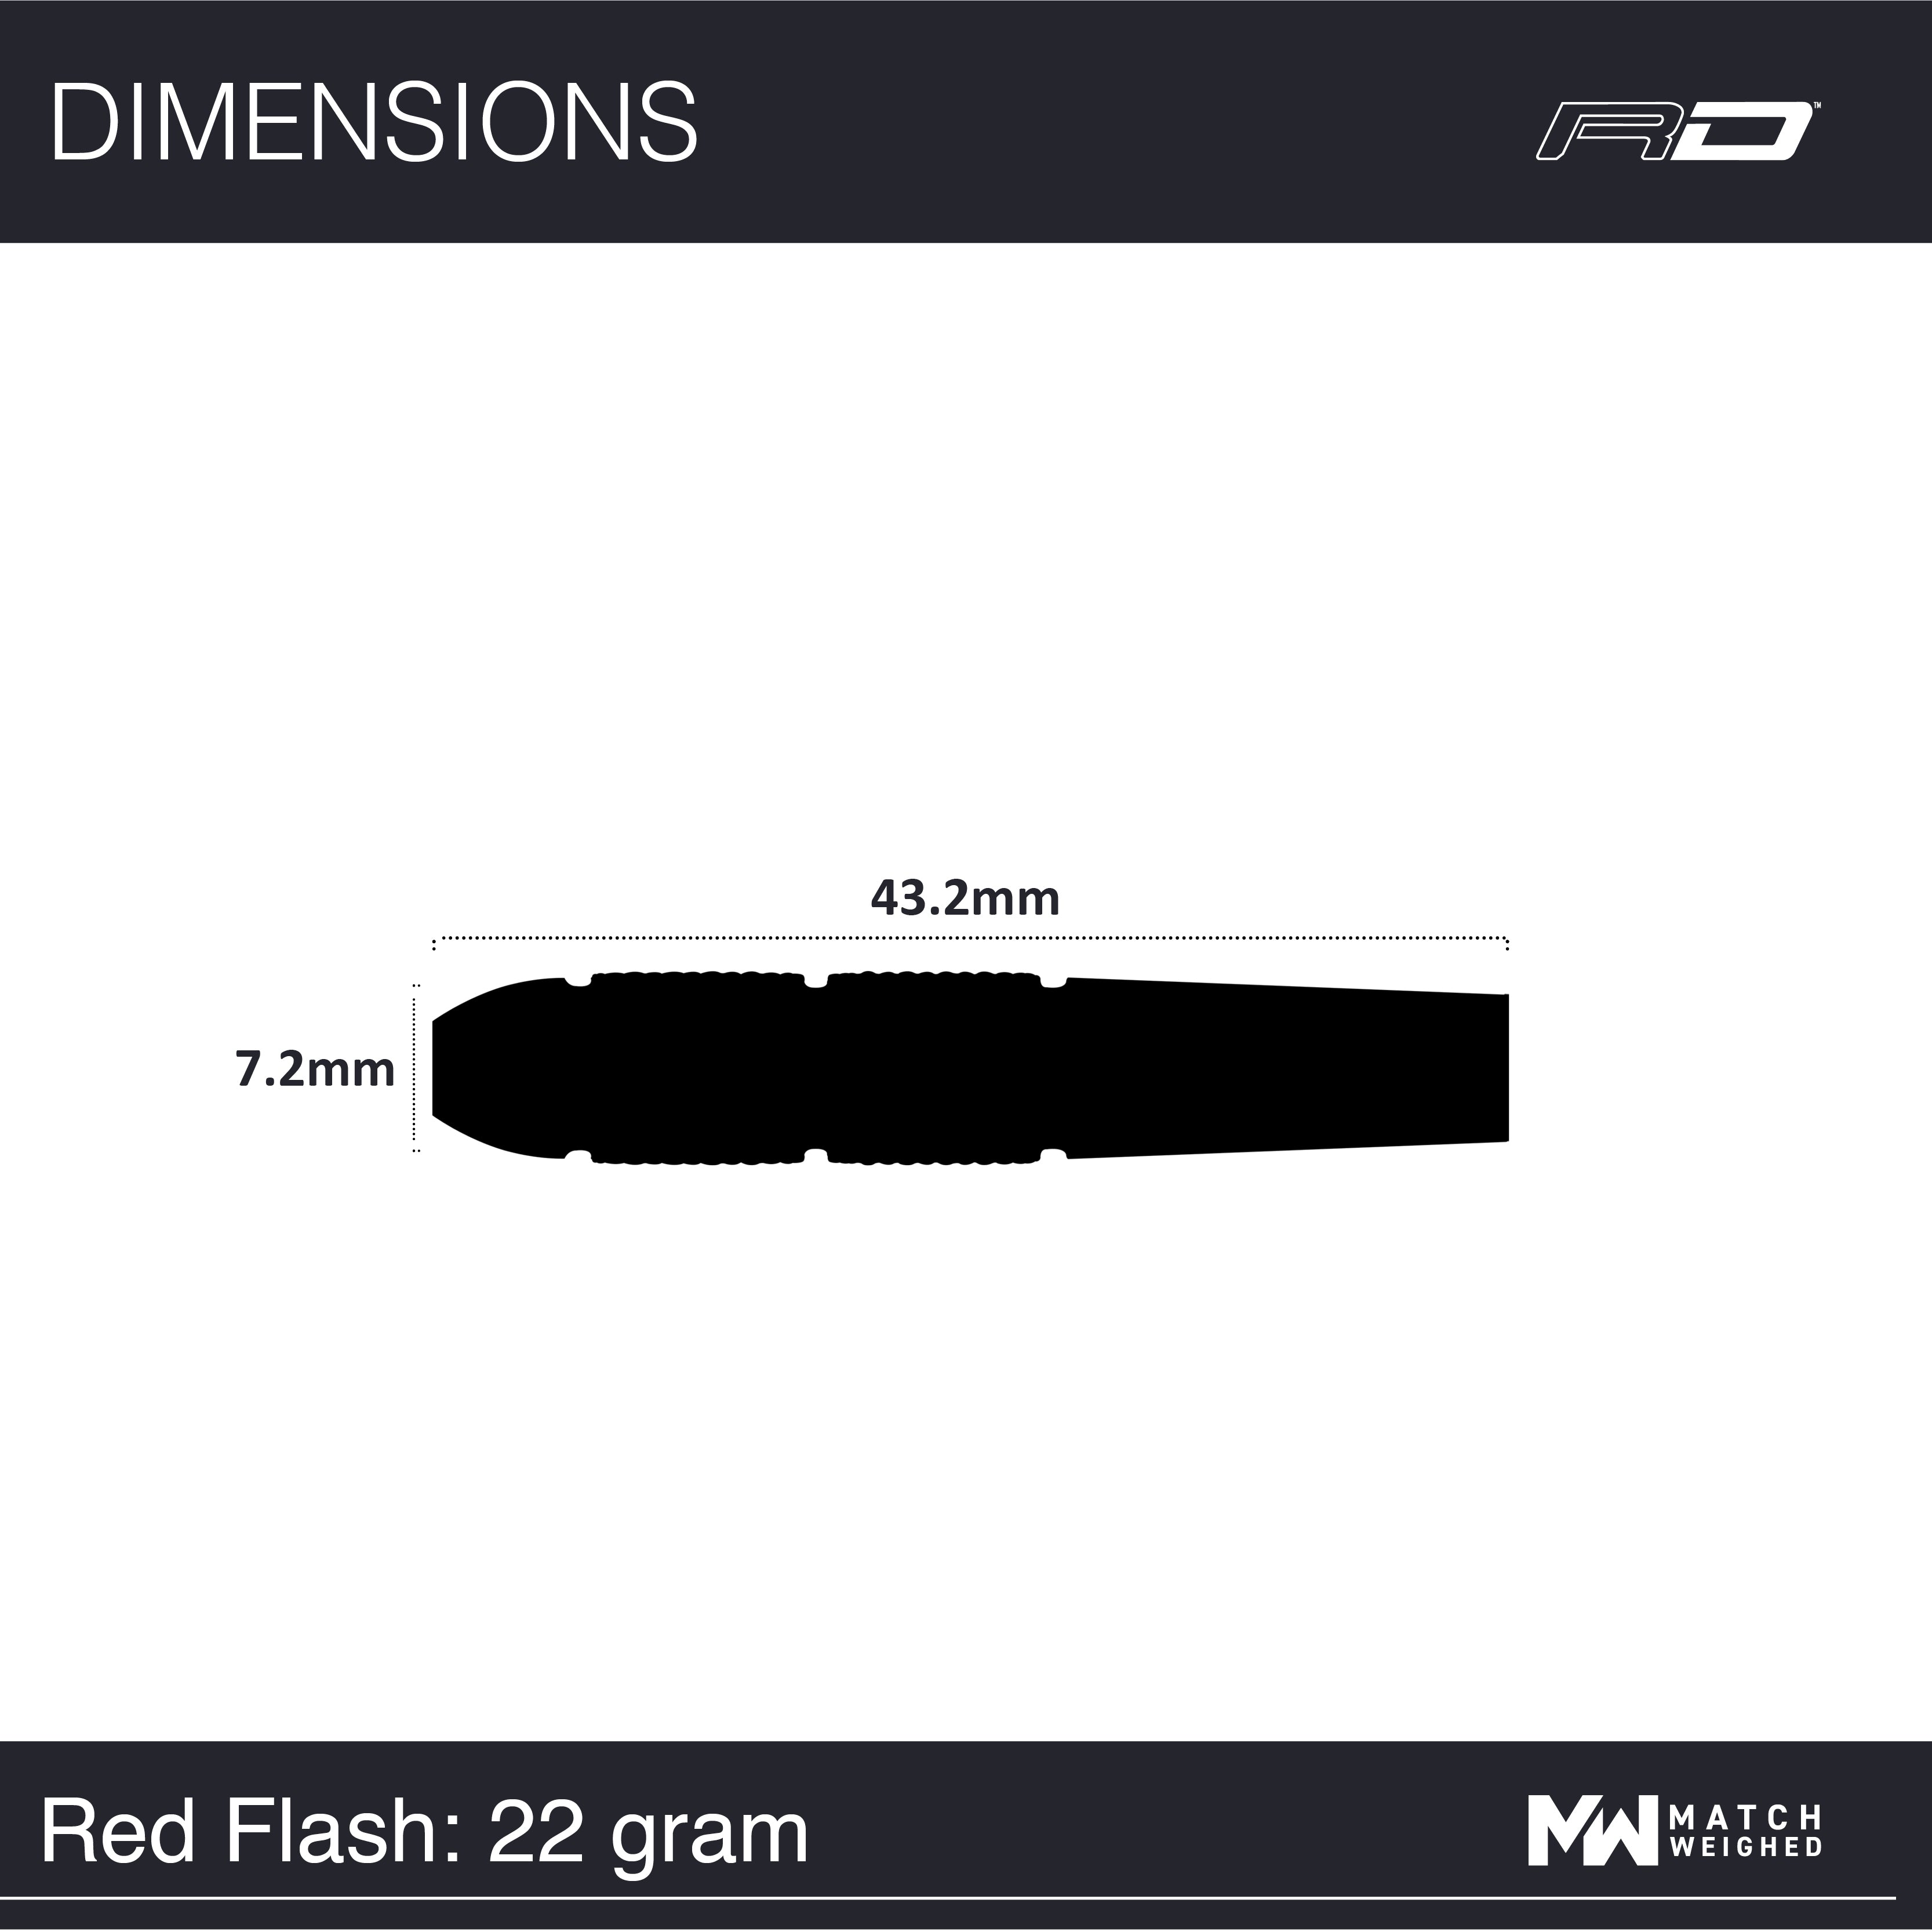 RDD0025_Red Flash 22g - Image 7.jpg